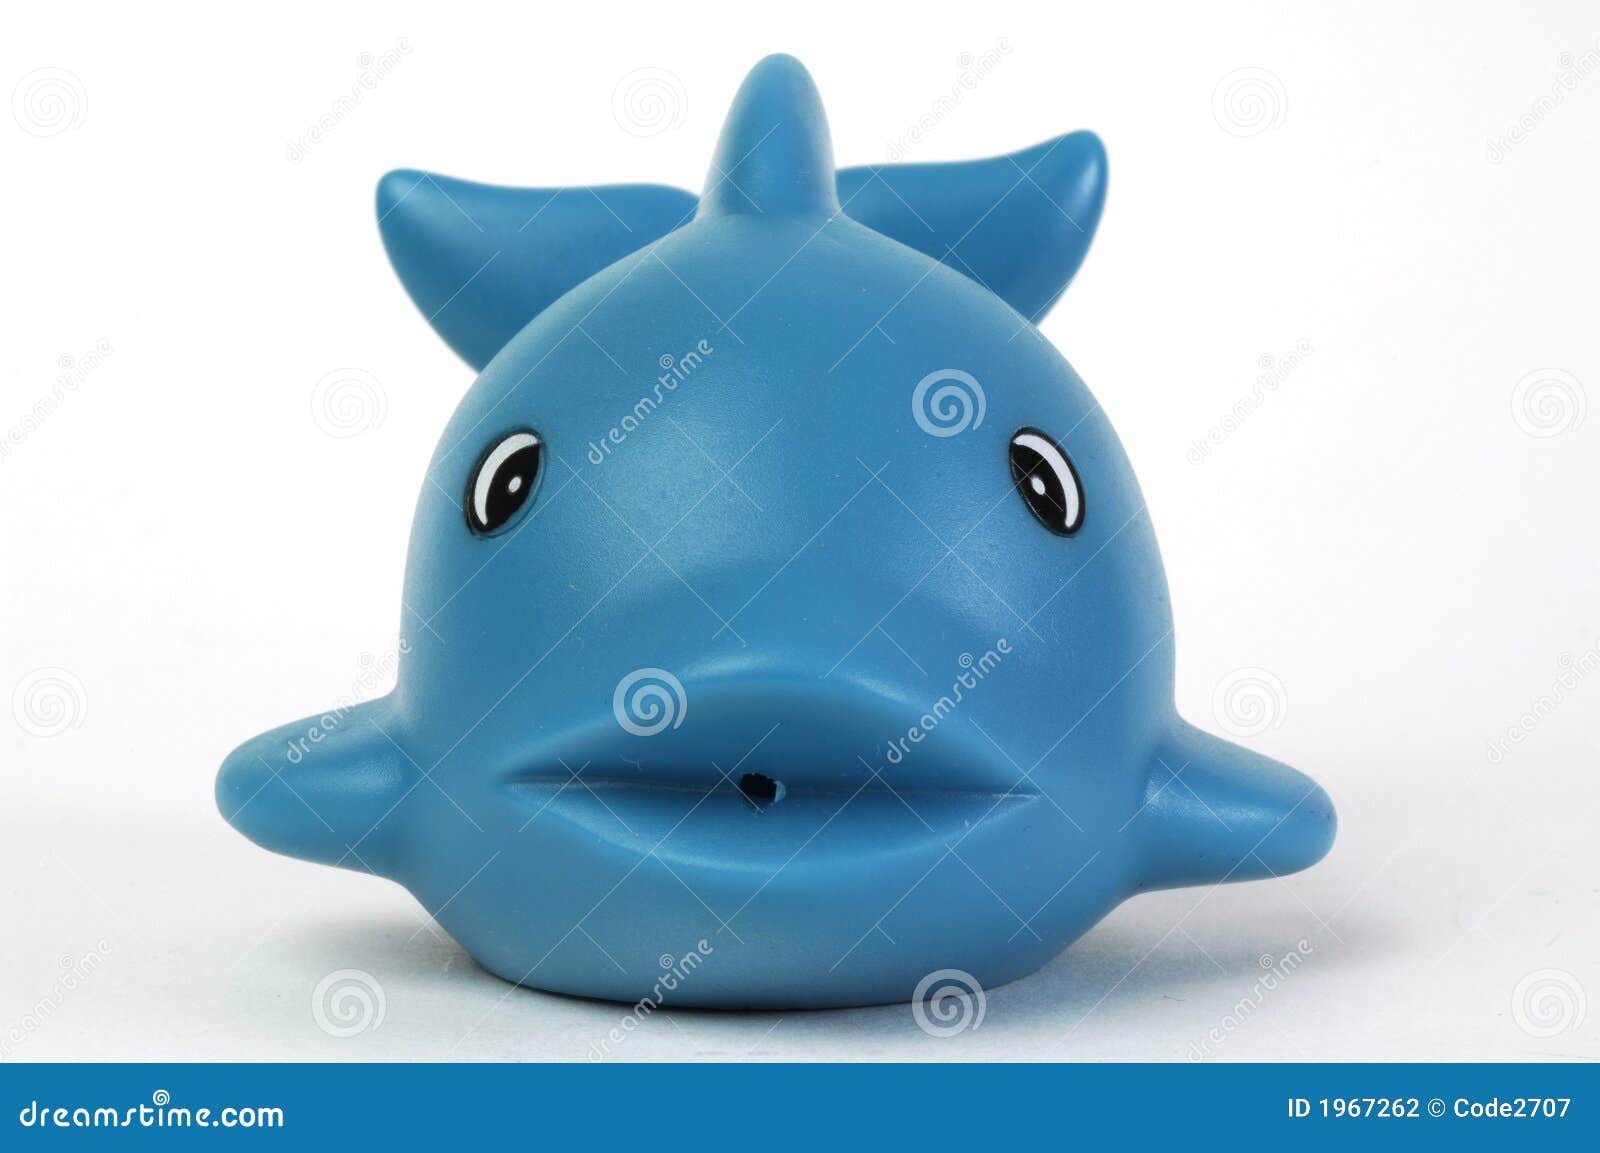 1,776 Plastic Toy Fish Stock Photos - Free & Royalty-Free Stock